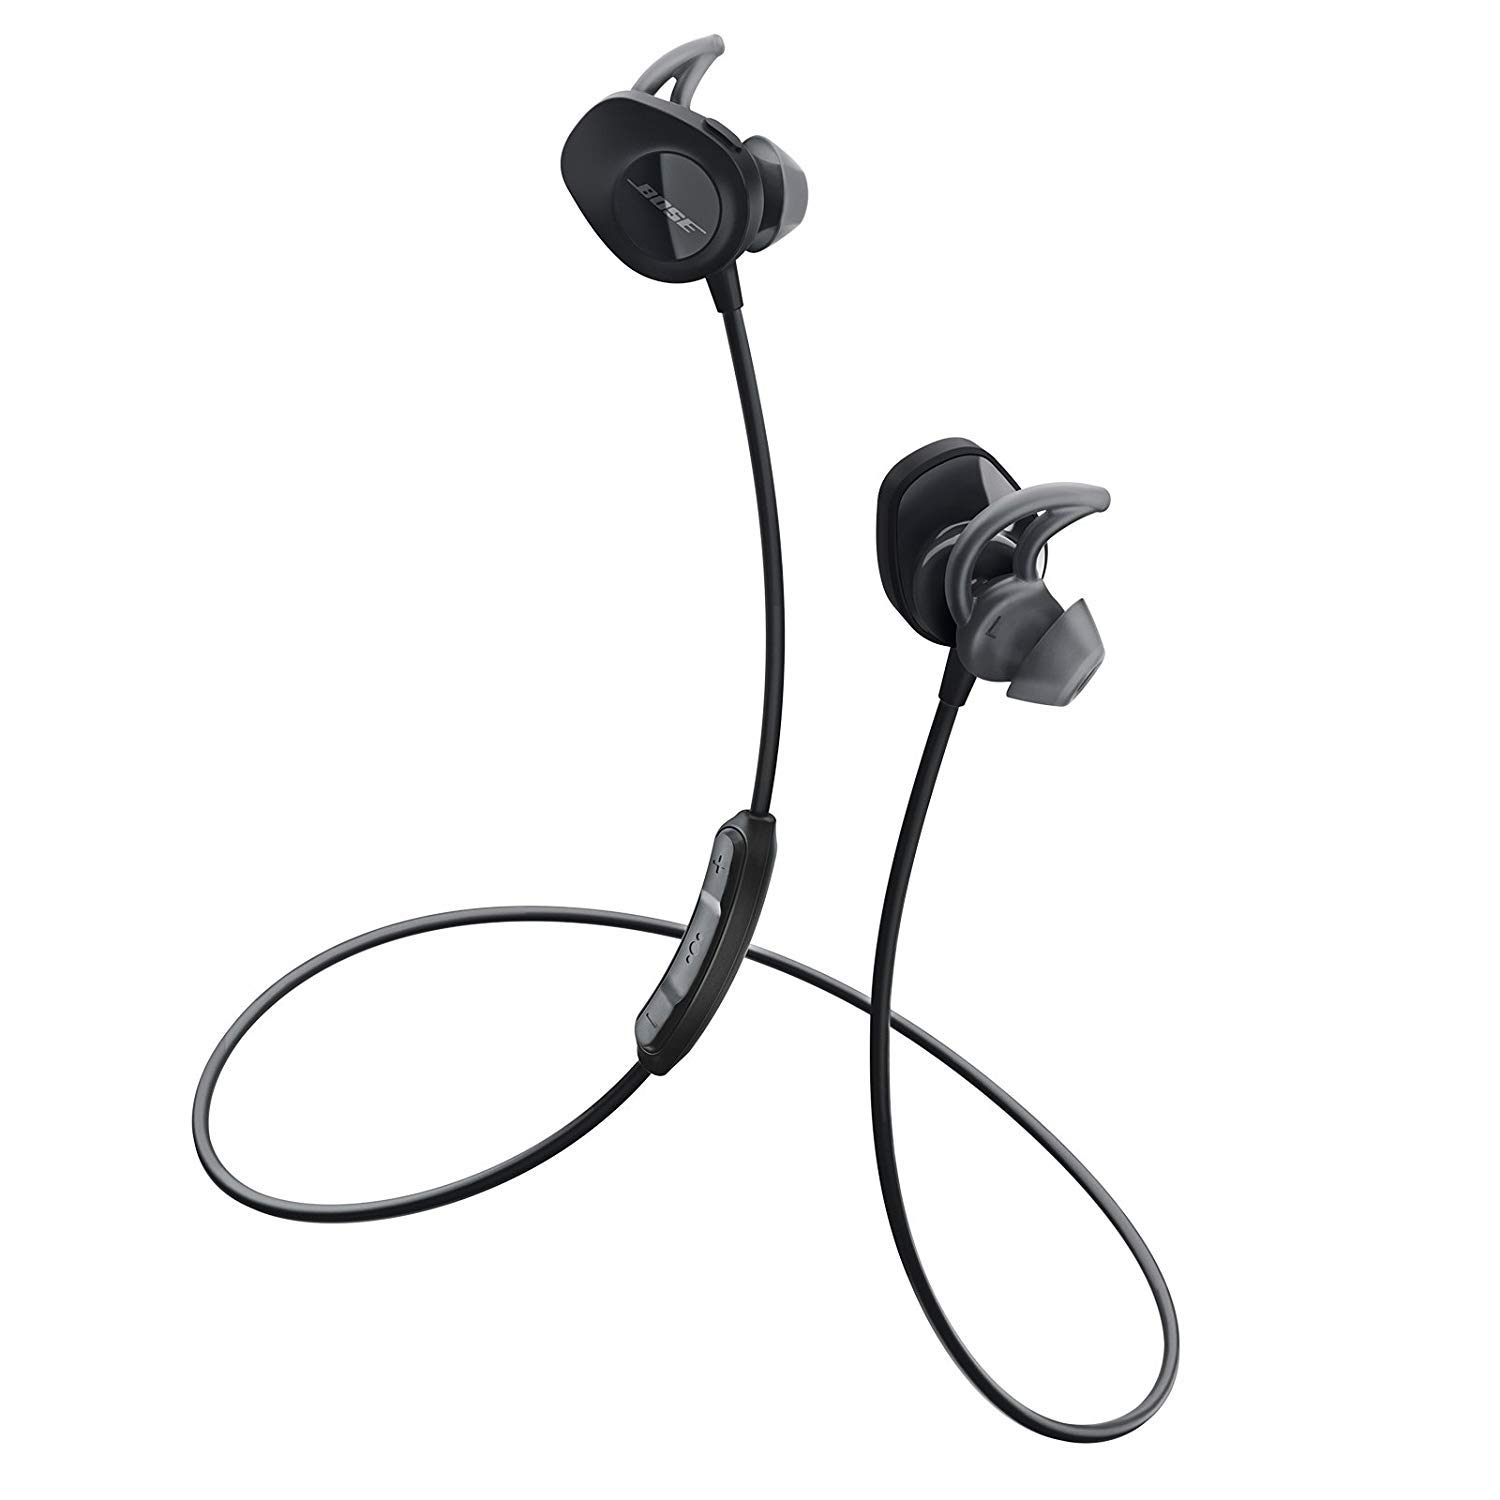 Refurbished (Good) - Bose SoundSport In-Ear Wireless Headphones - Black [Refurbished]